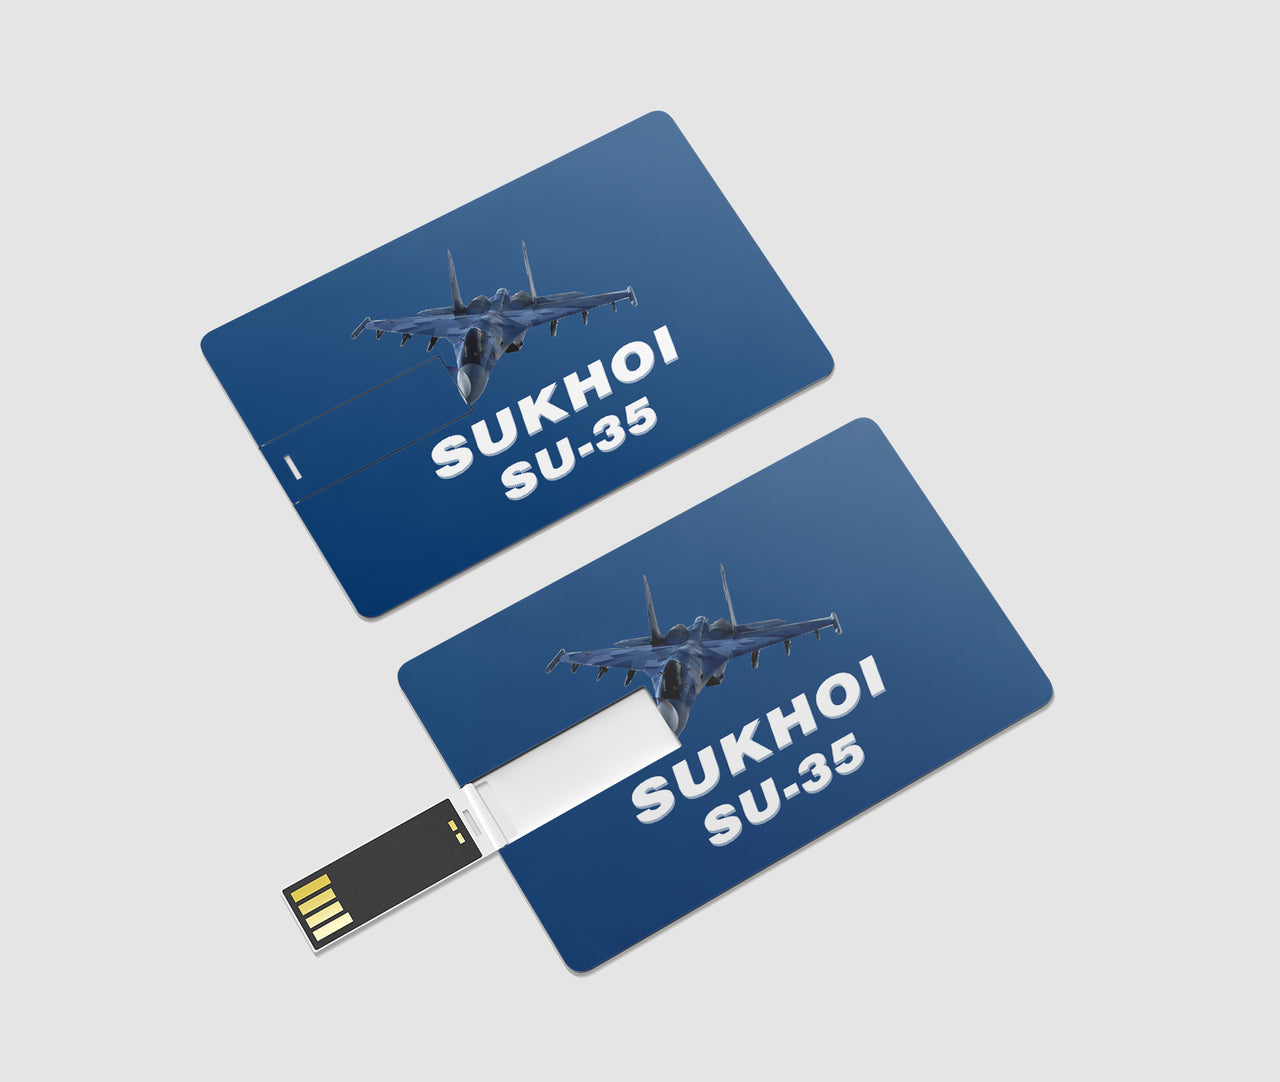 The Sukhoi SU-35 Designed USB Cards